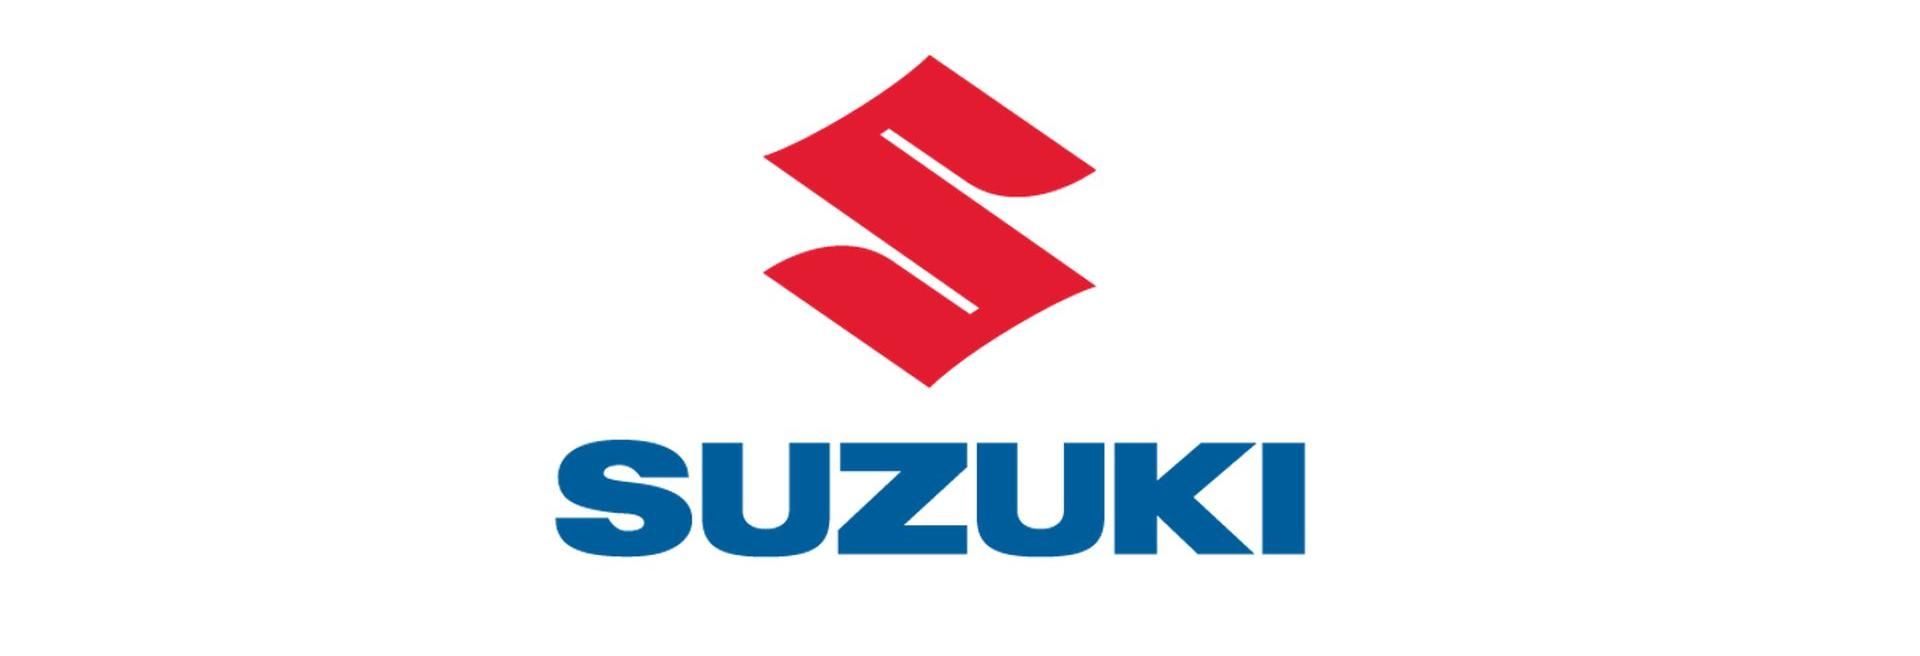 3 évtizede tart a Magyar Suzuki sikertörténete